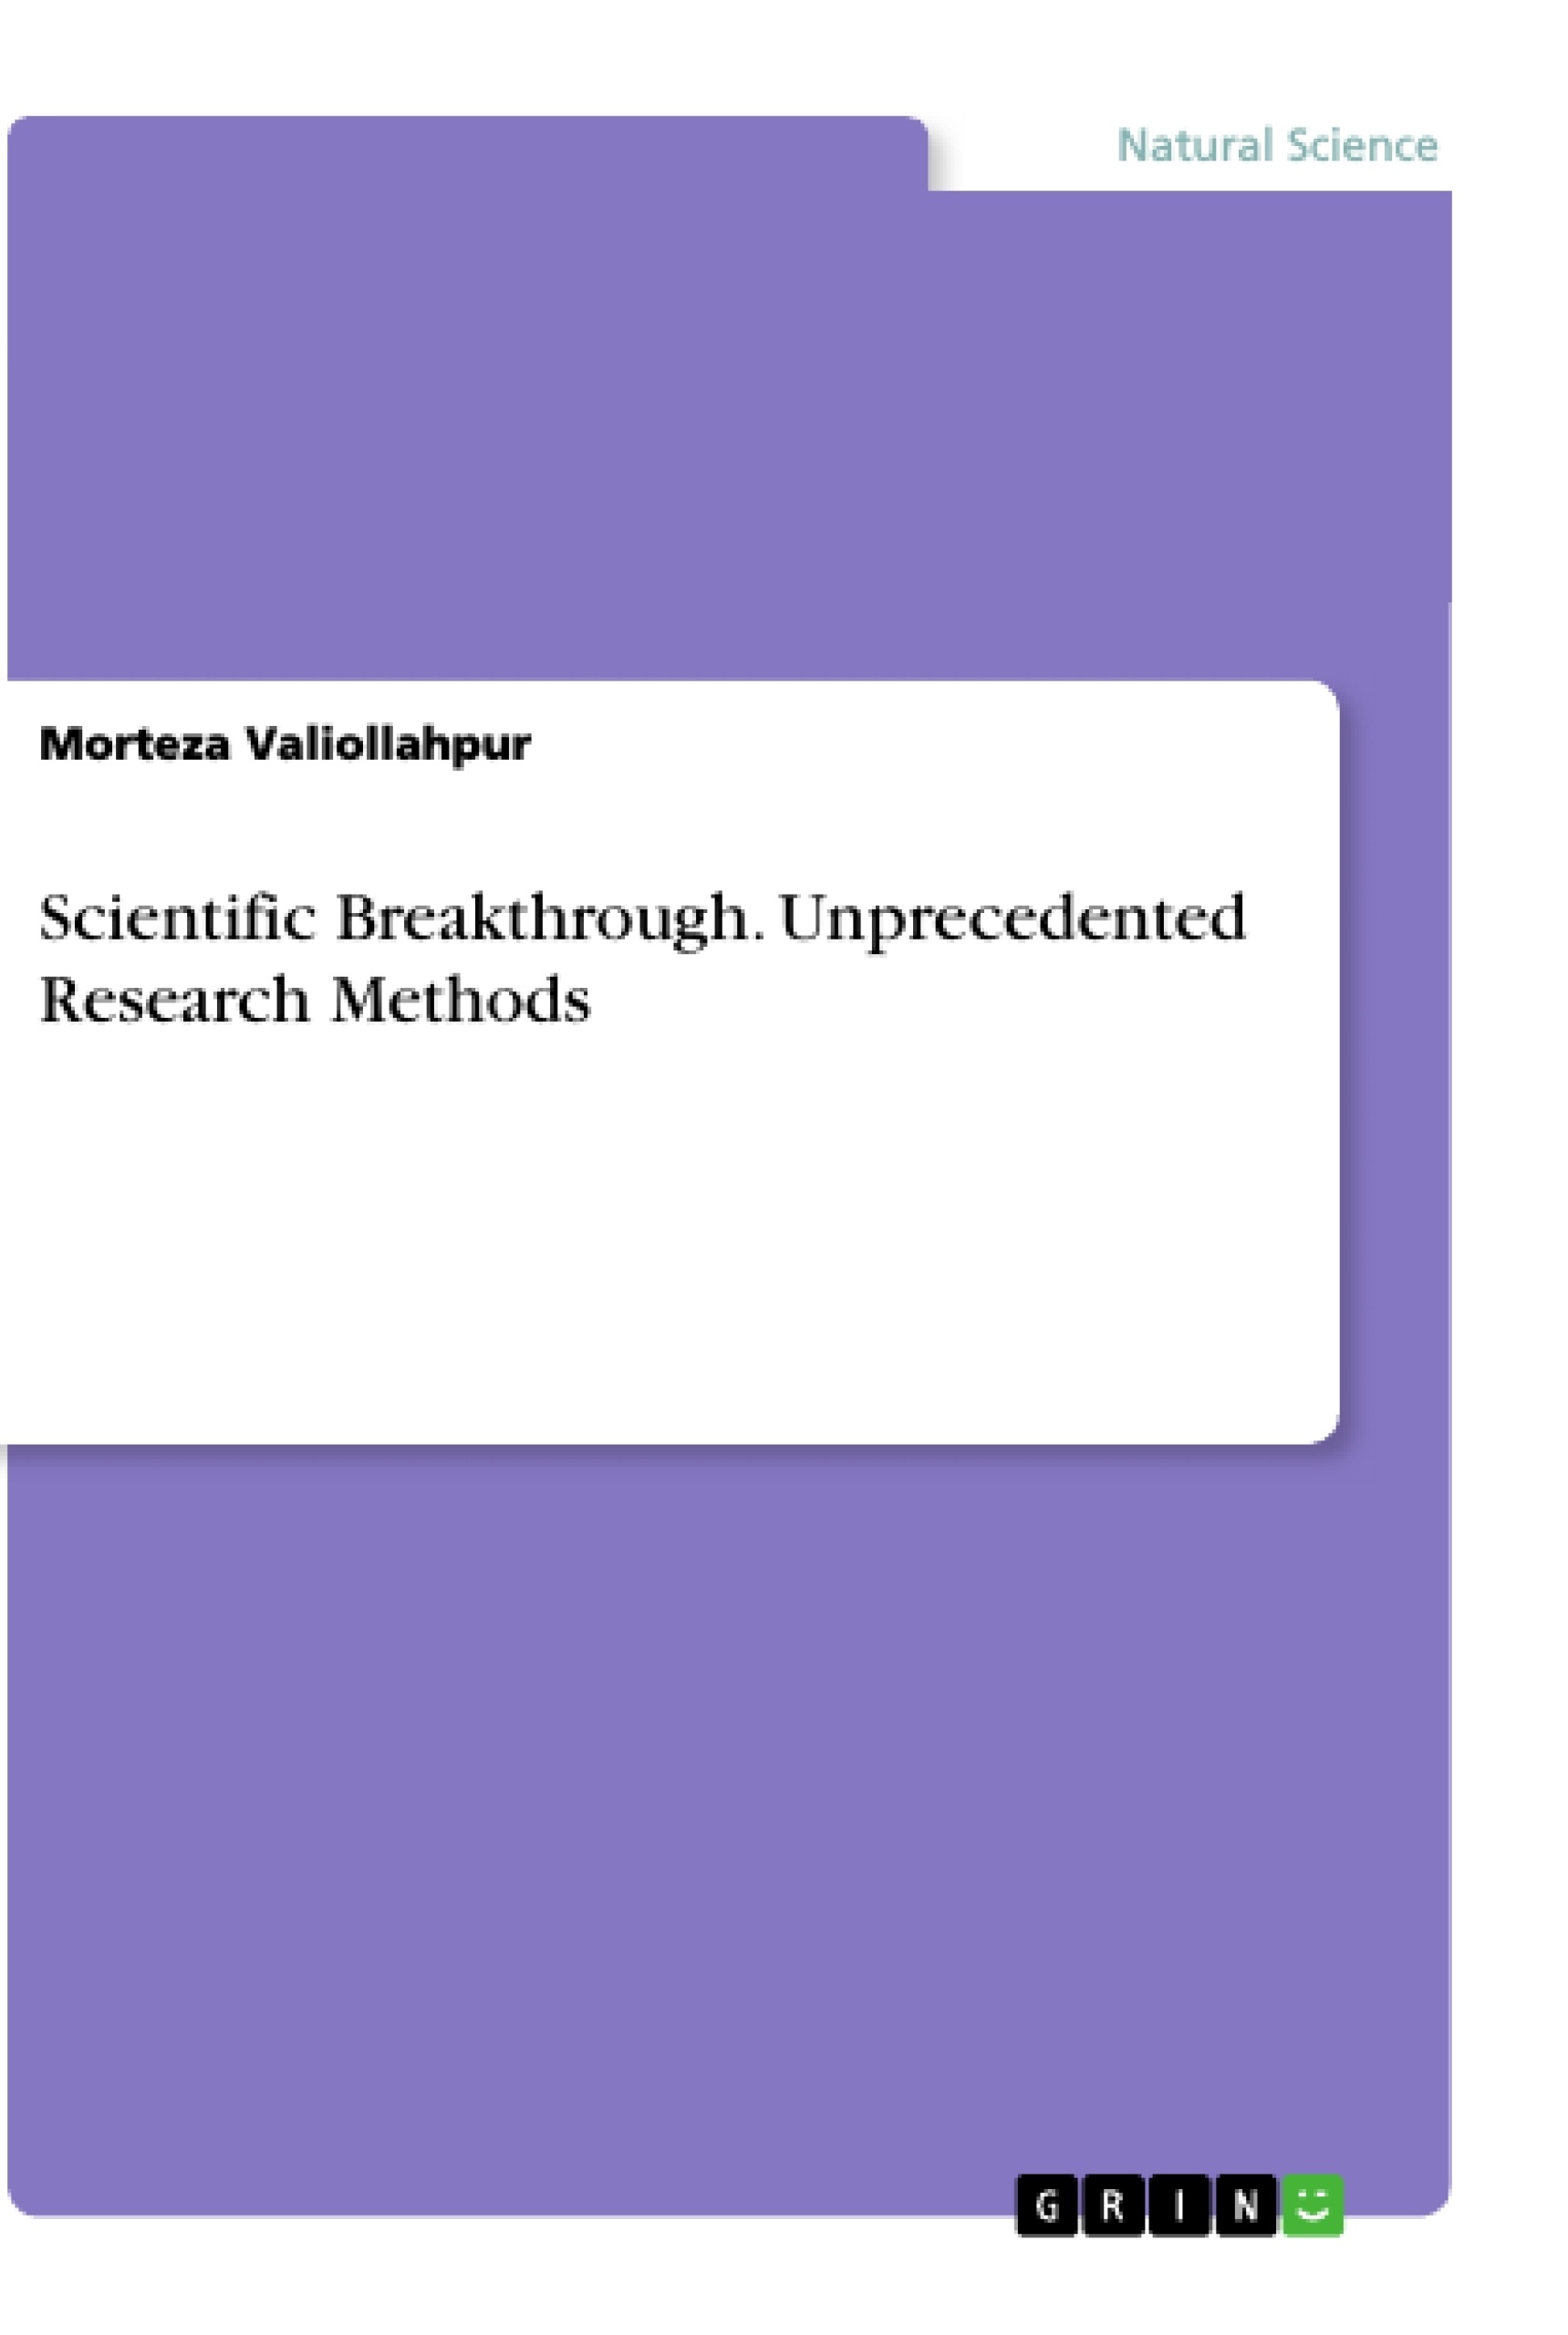 Title: Scientific Breakthrough. Unprecedented Research Methods